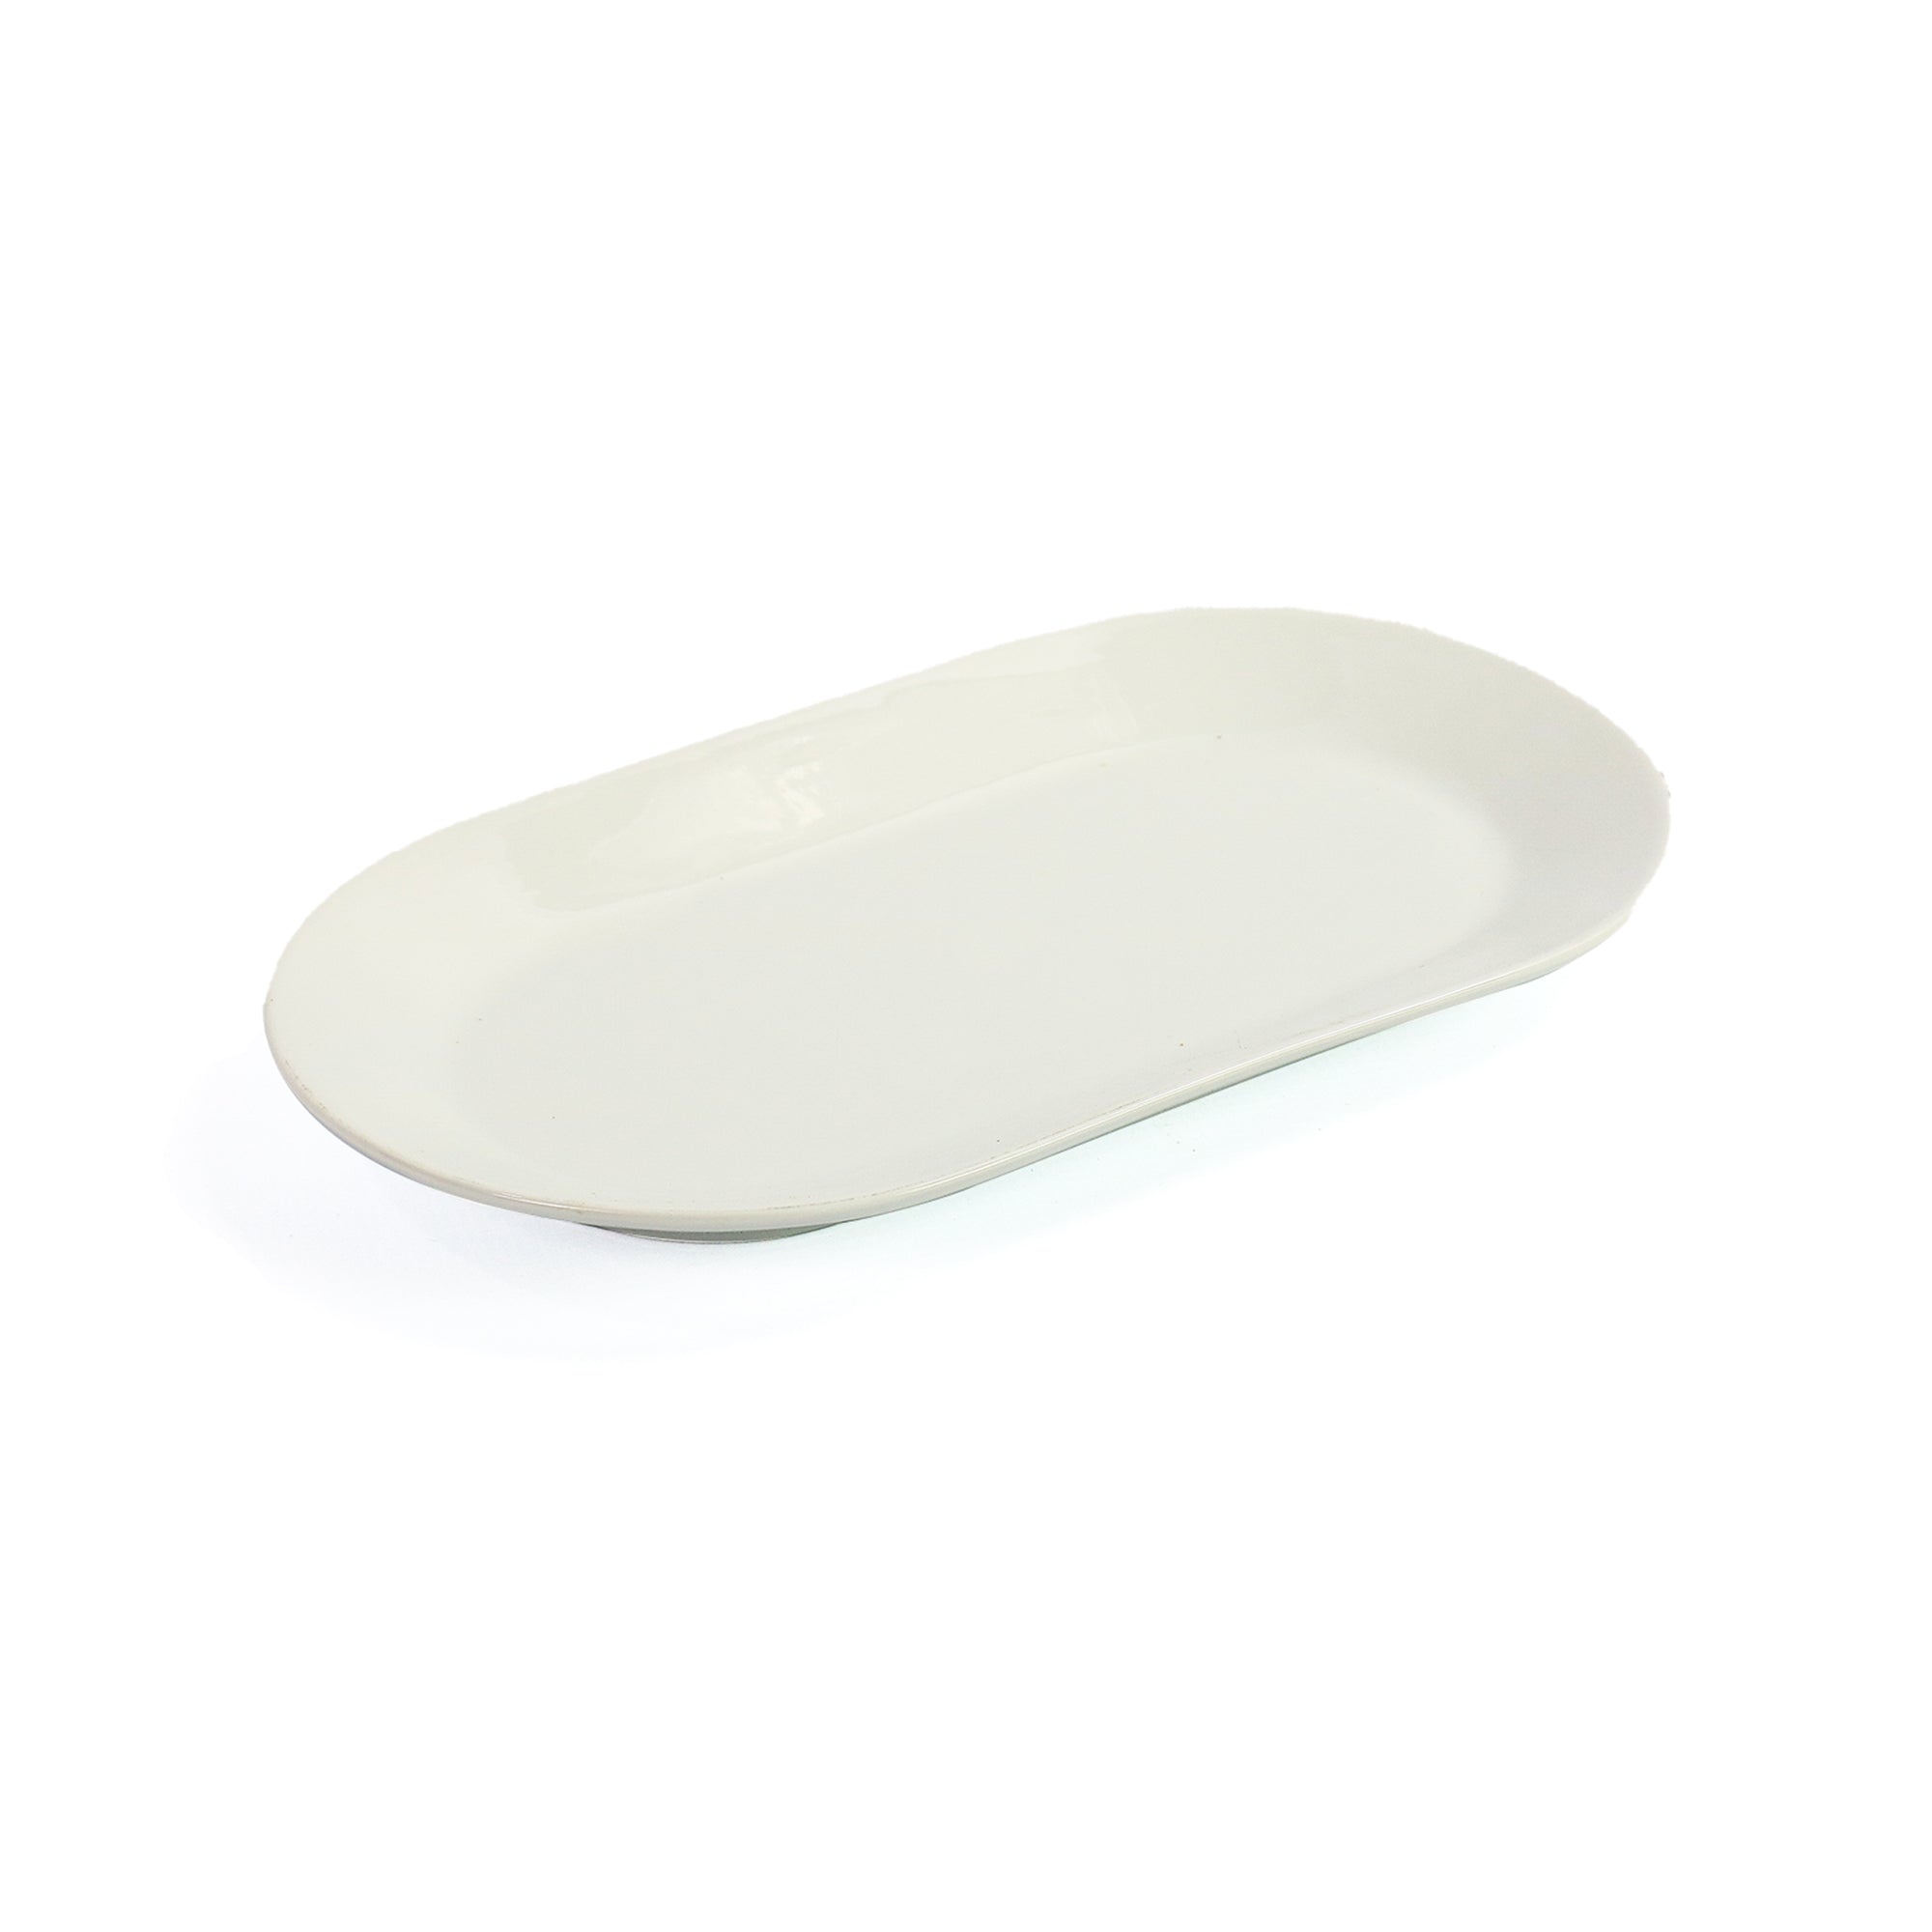 Ceramic White Serving Plate Oval 13inch 33.5x19x3.3cm